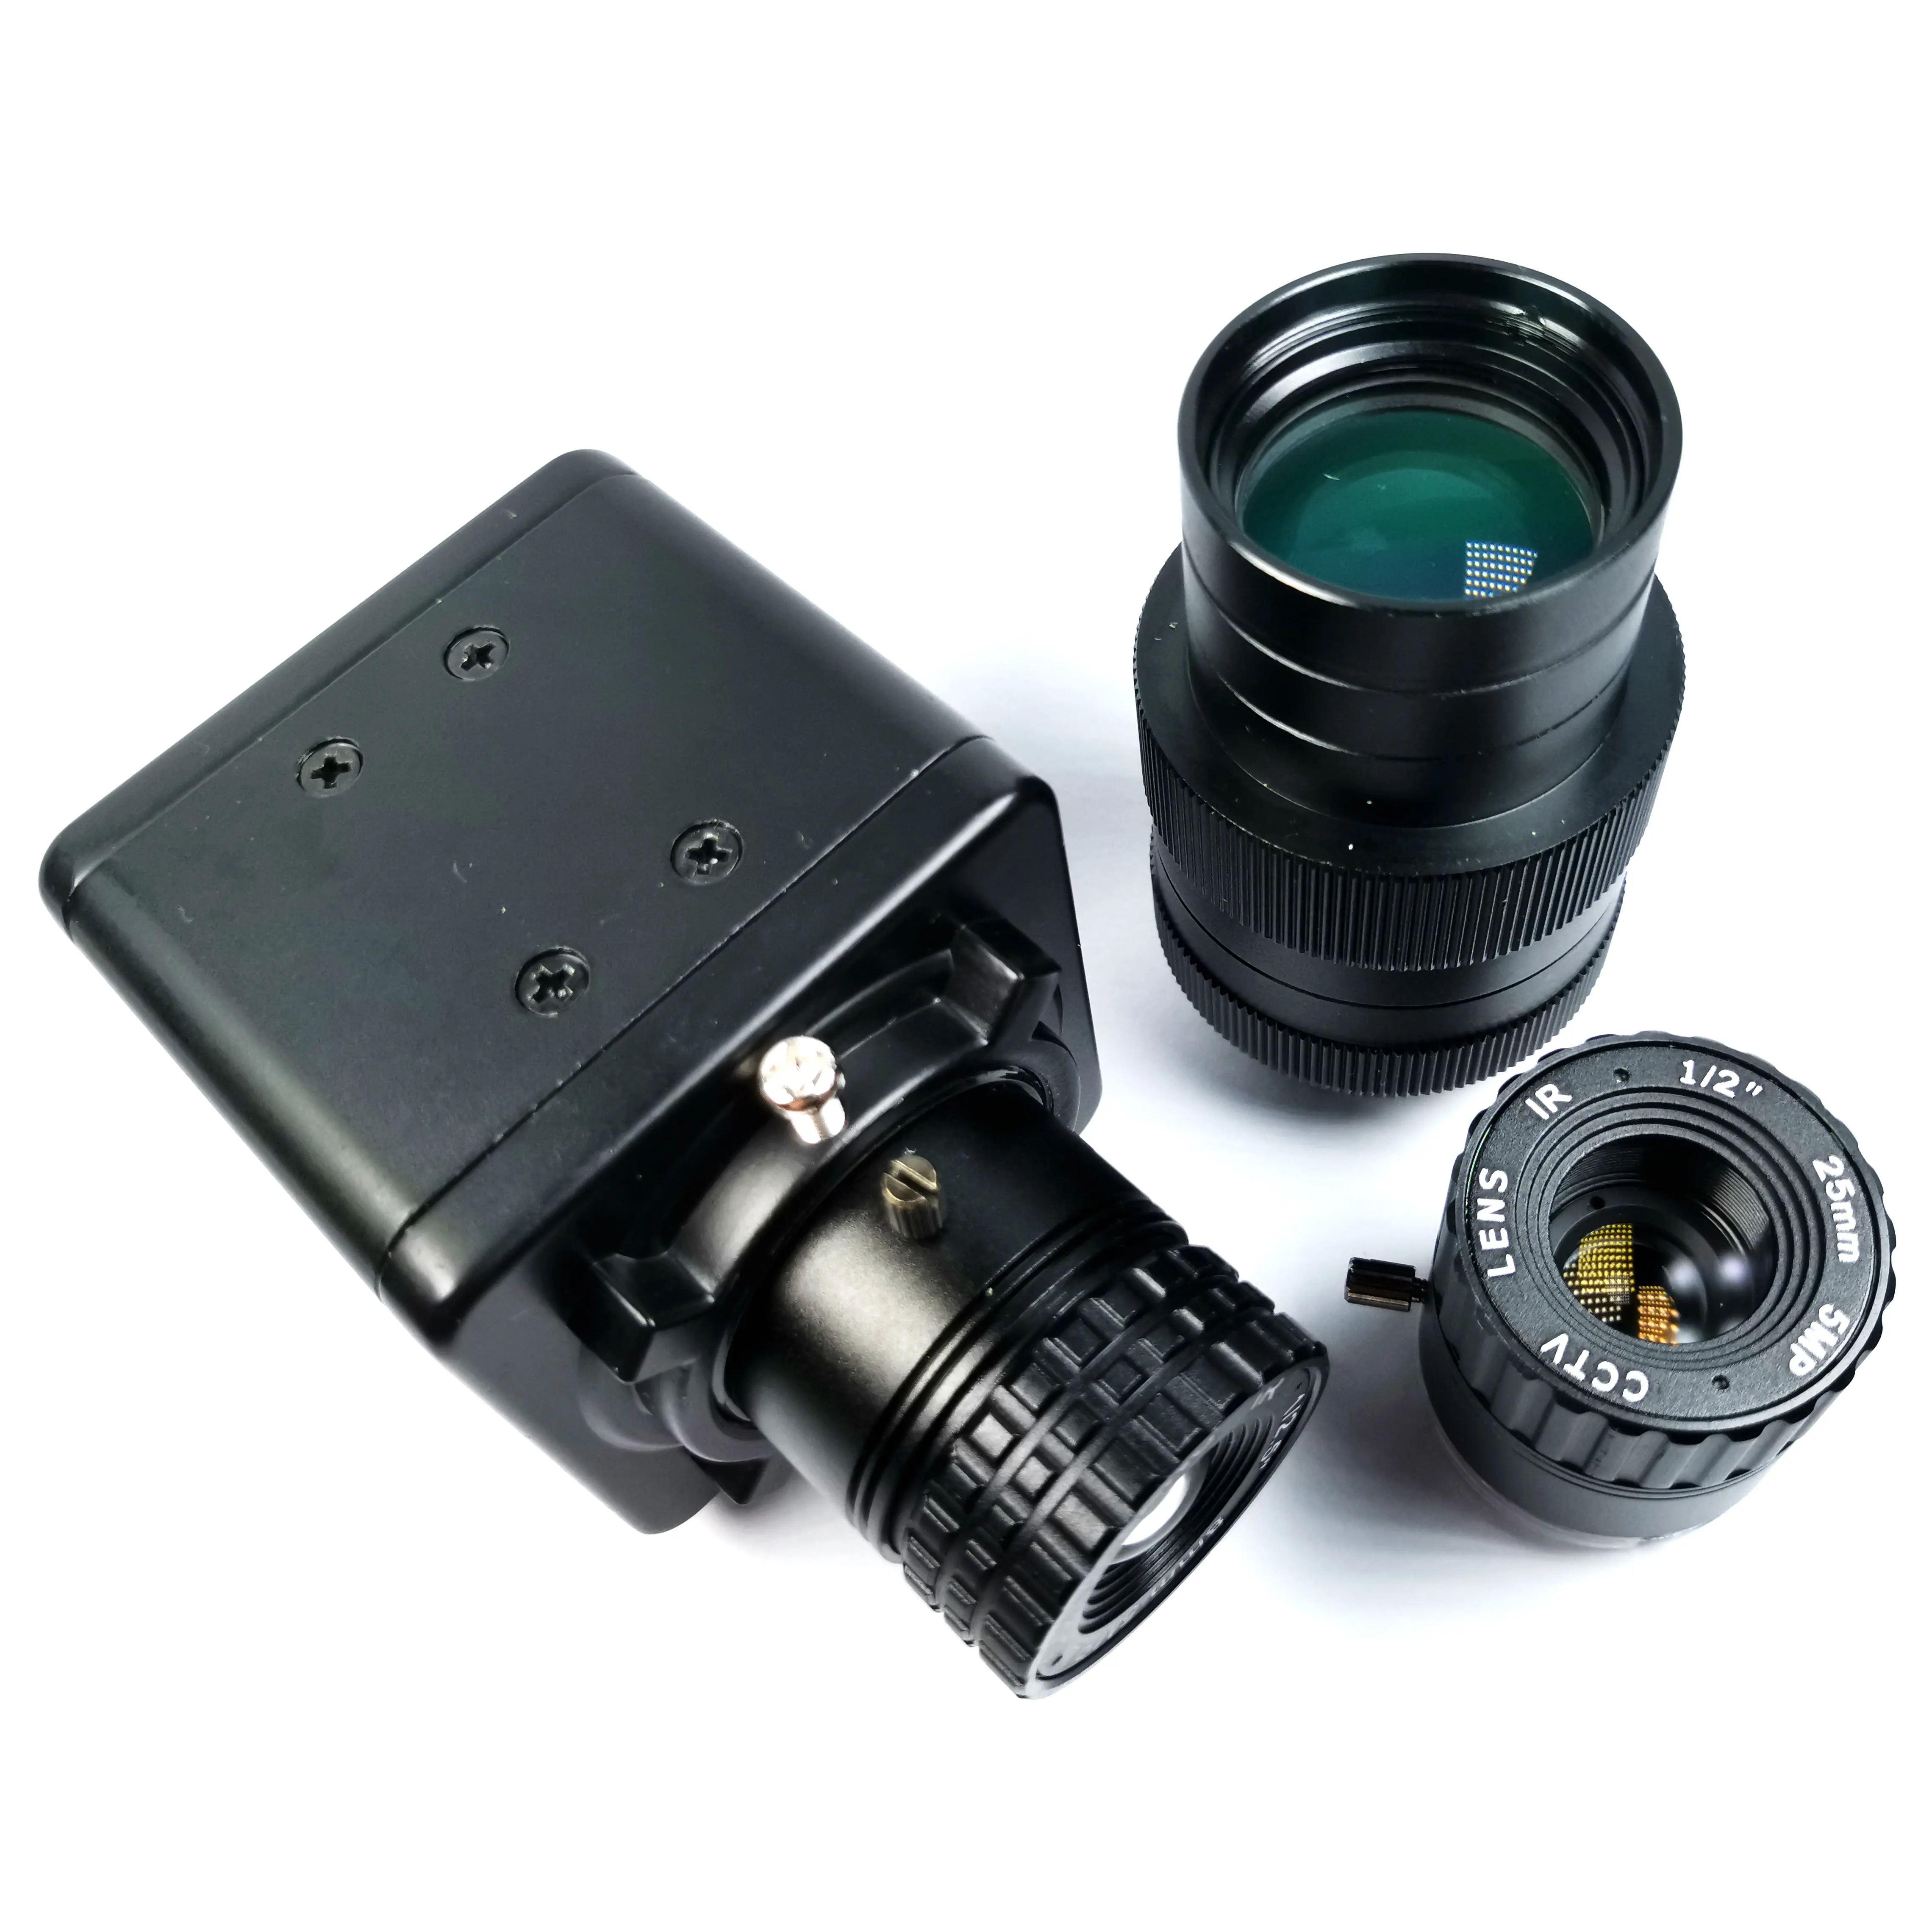 Weinan 공장 직접 판매 IMX577 4K 30FPS HD USB 카메라 산업 품질 USB 카메라 기계 비전 화상 회의